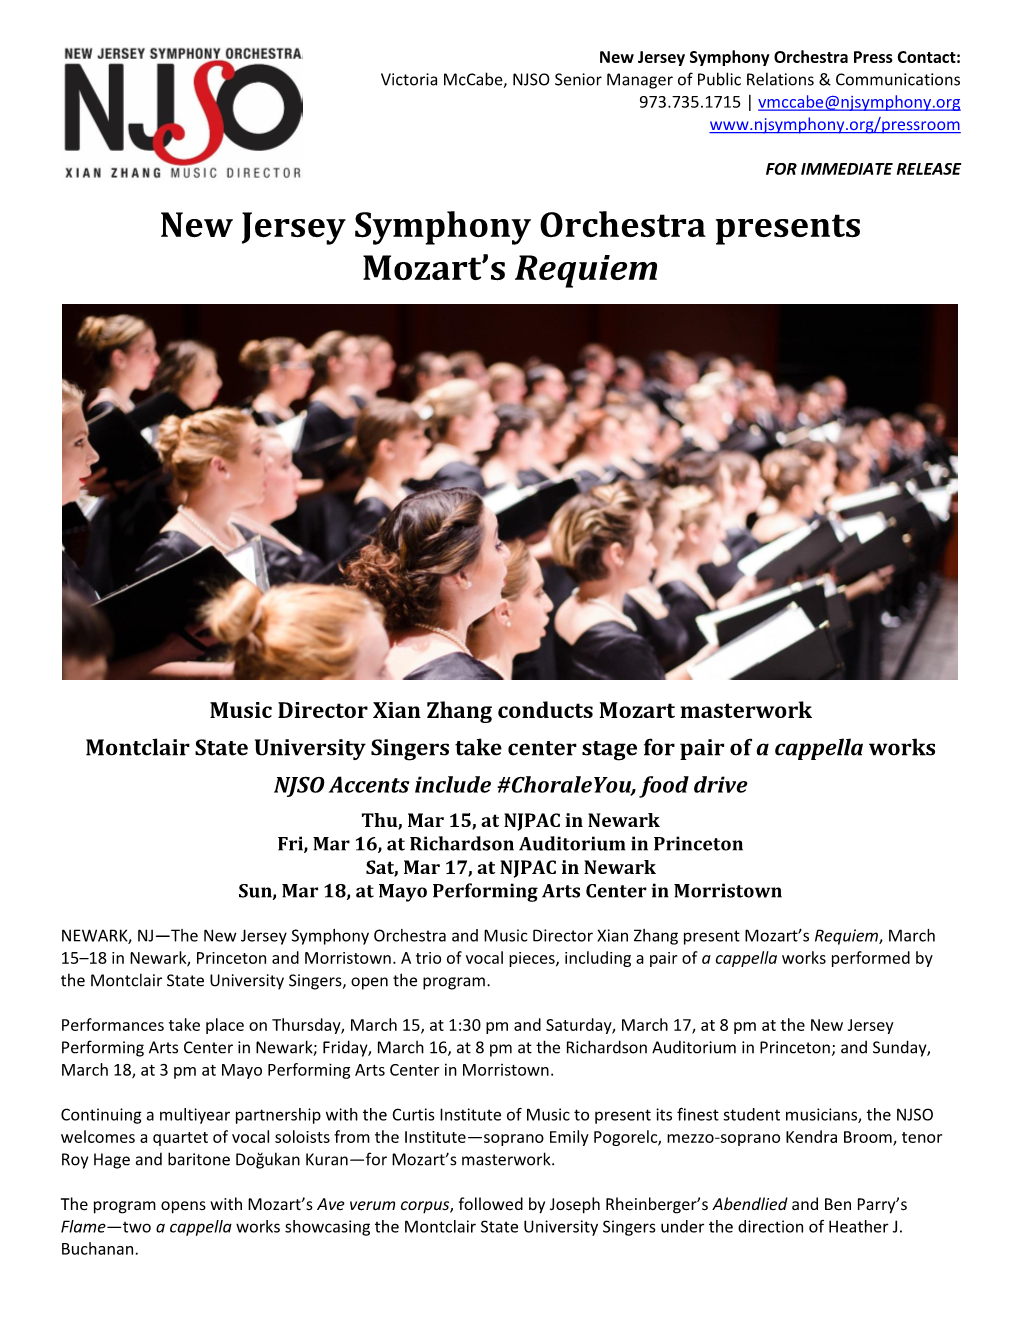 New Jersey Symphony Orchestra Presents Mozart's Requiem